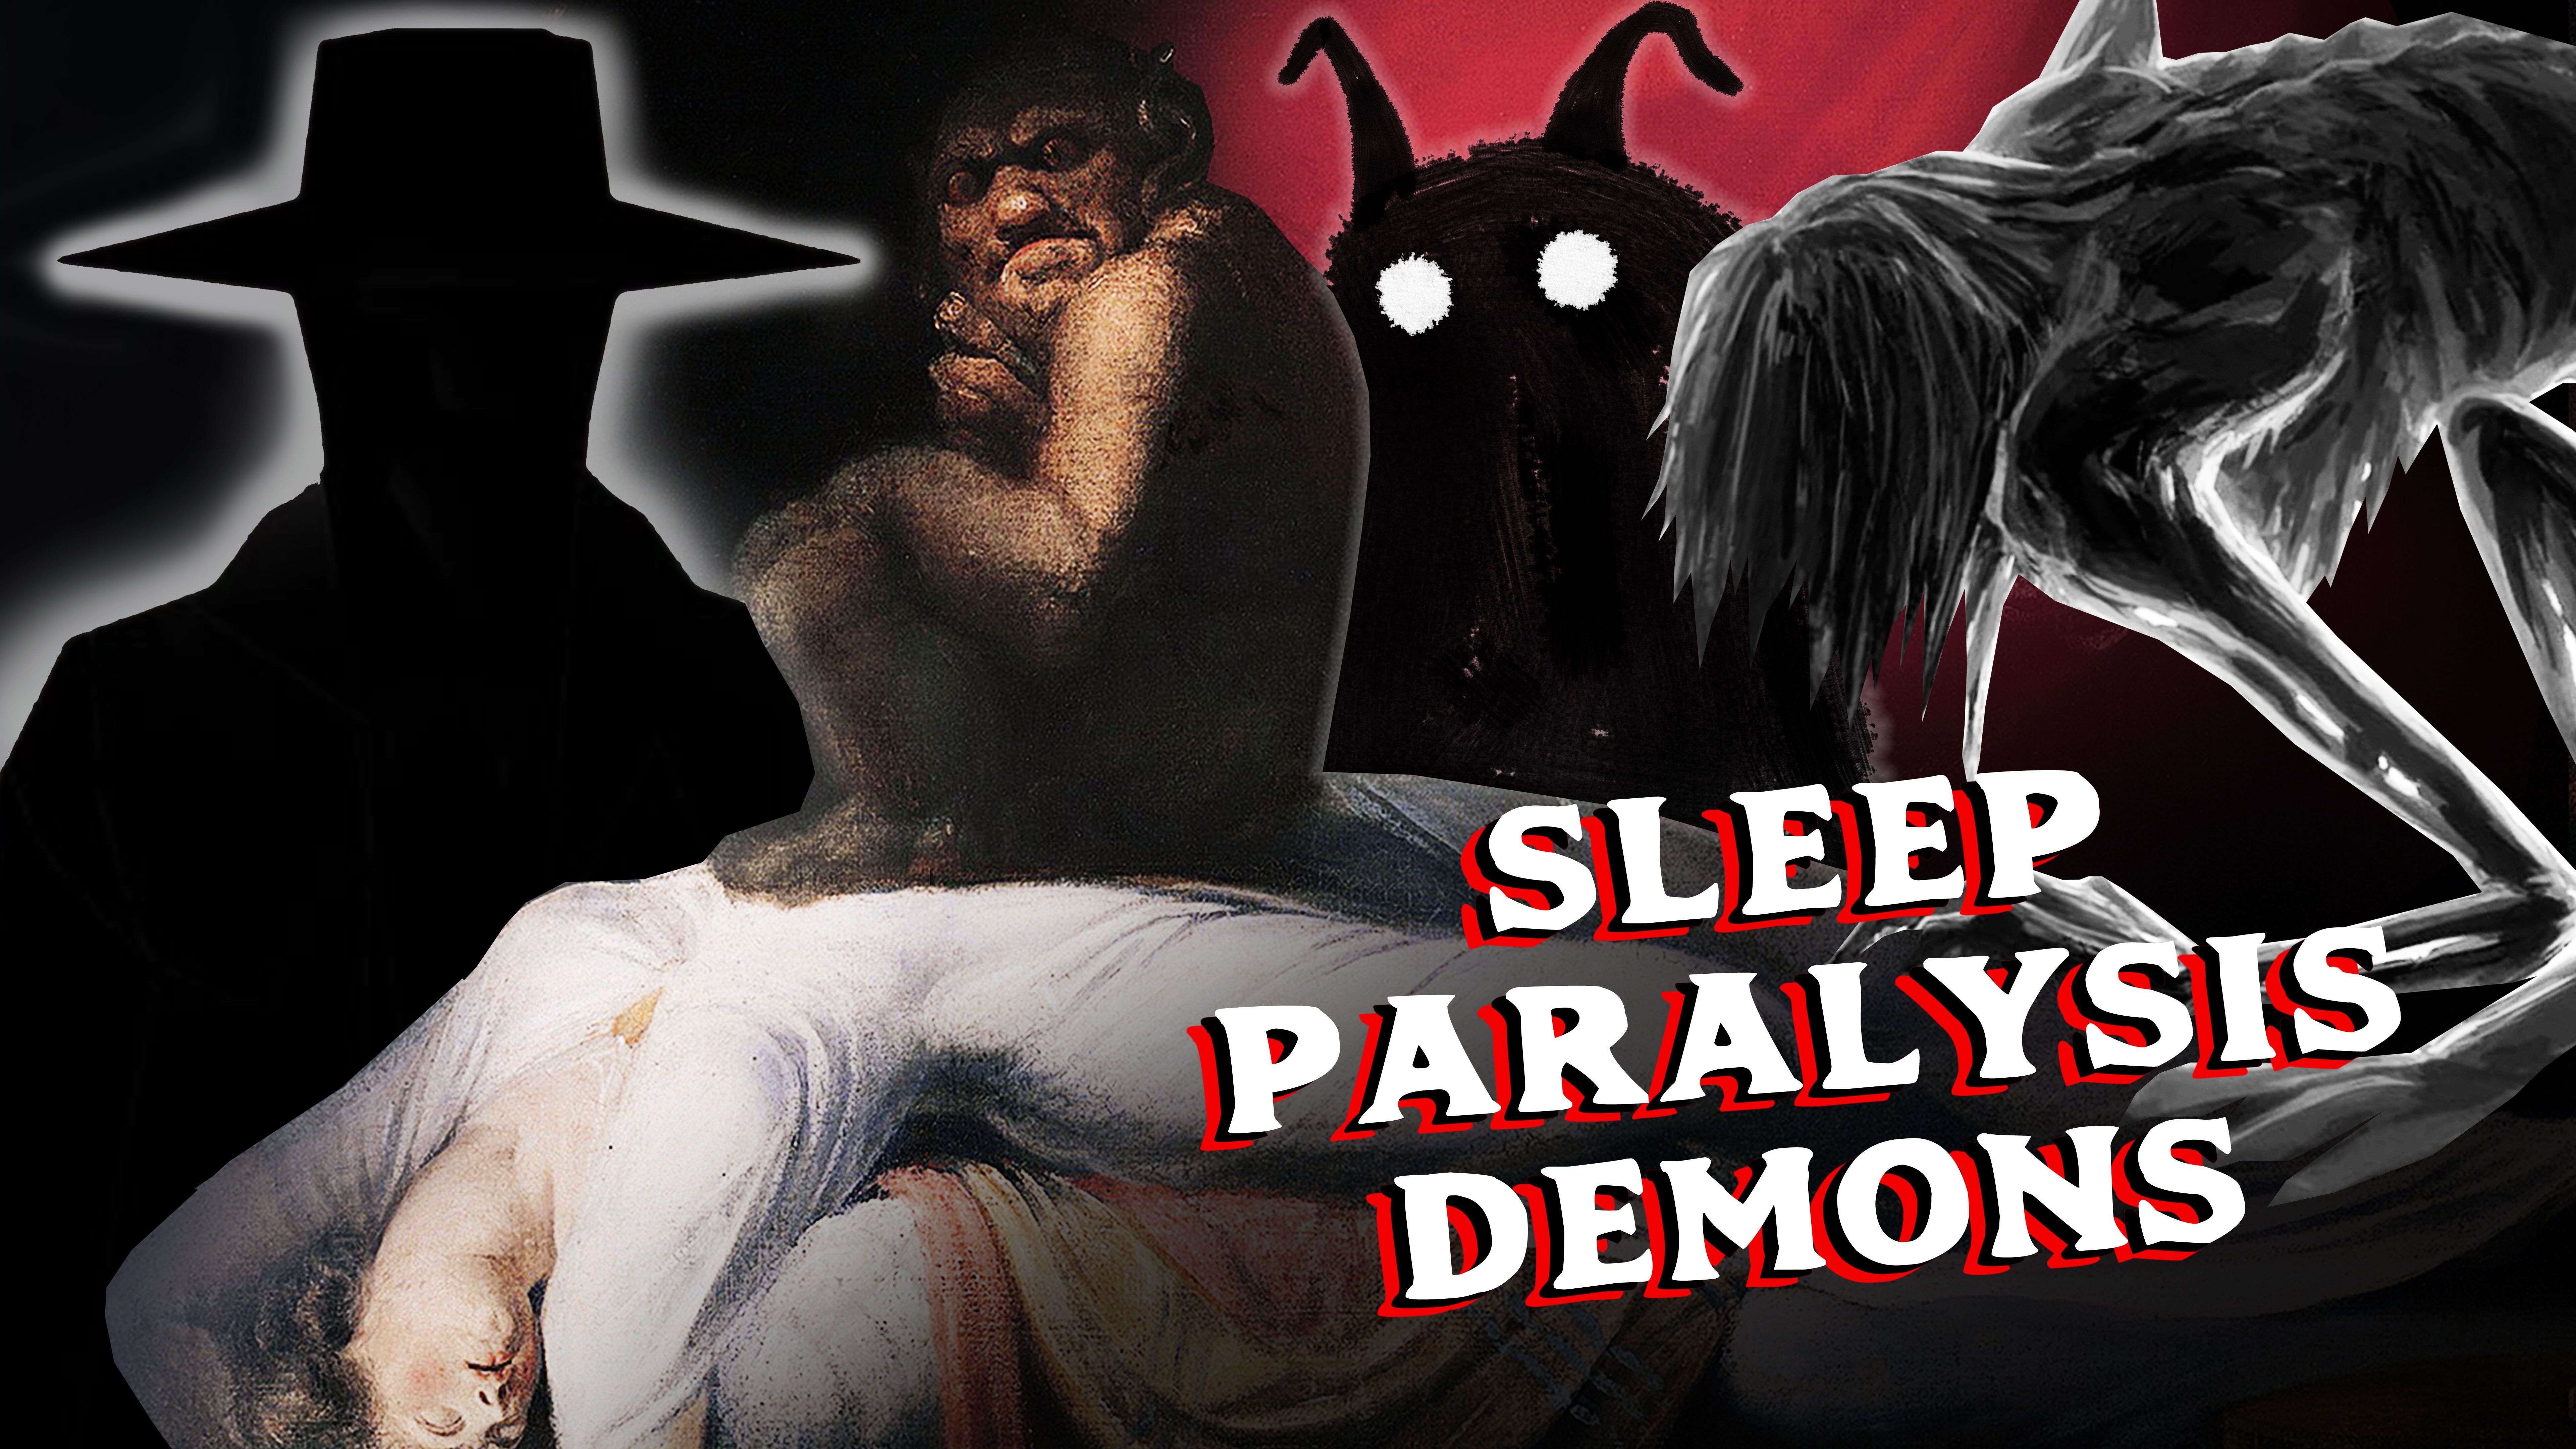 Sleep paralysis demon pictures